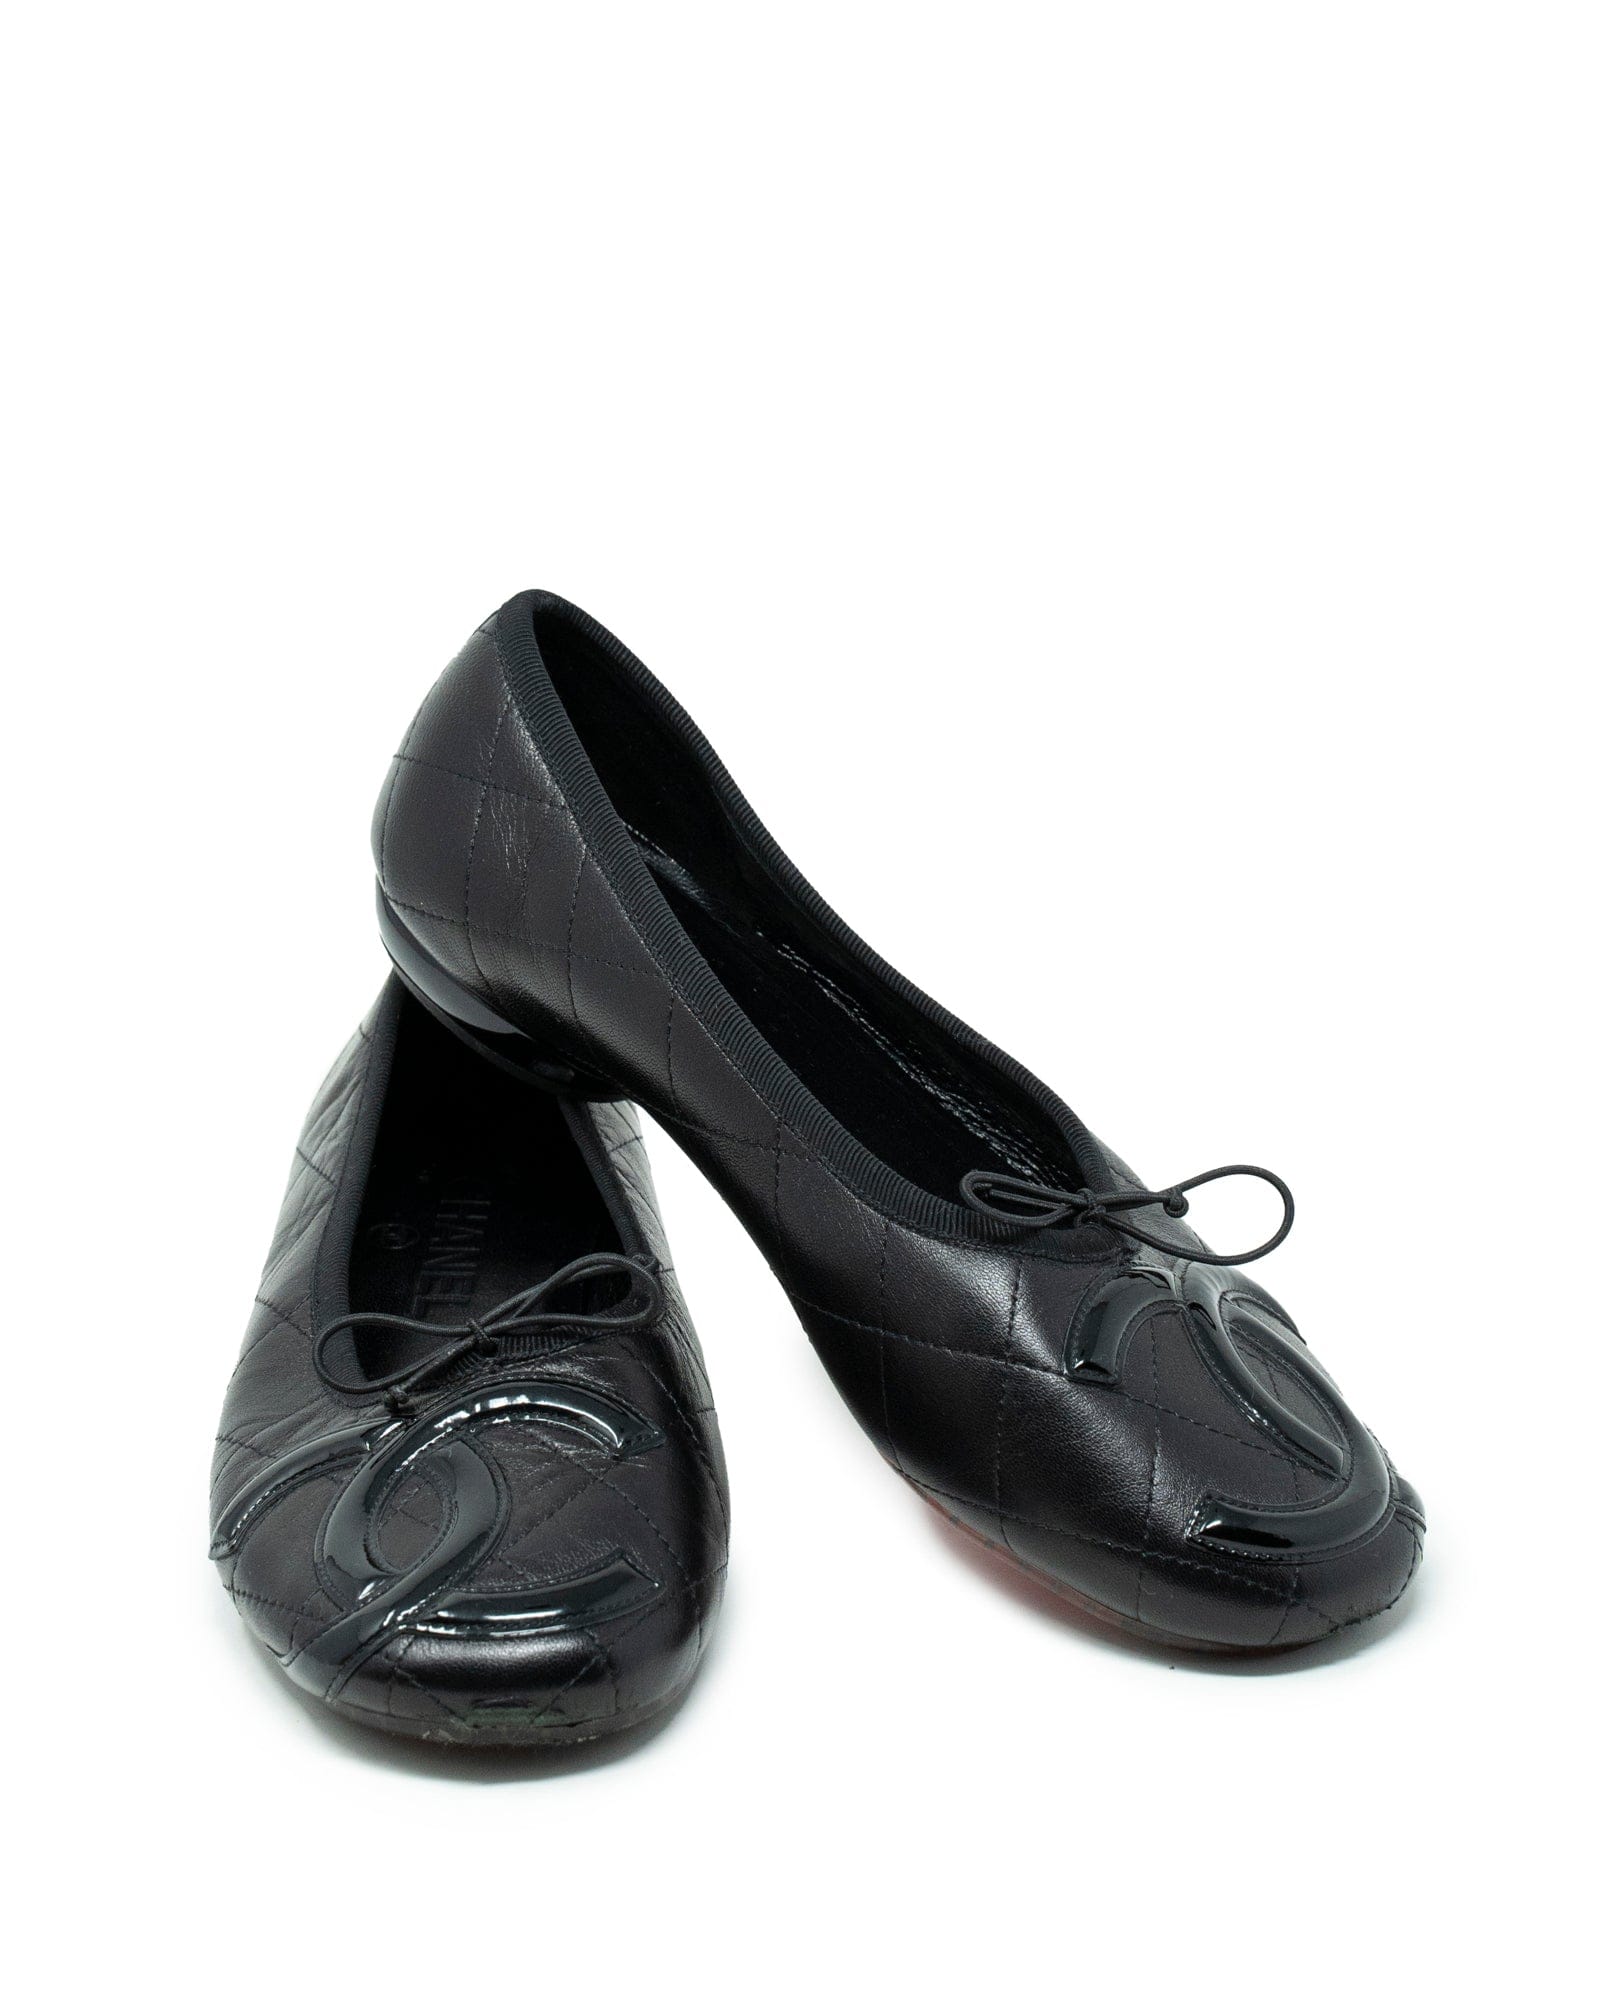 Chanel Rue Cambon Ballet Pumps Shoes size 37 - AWC1179